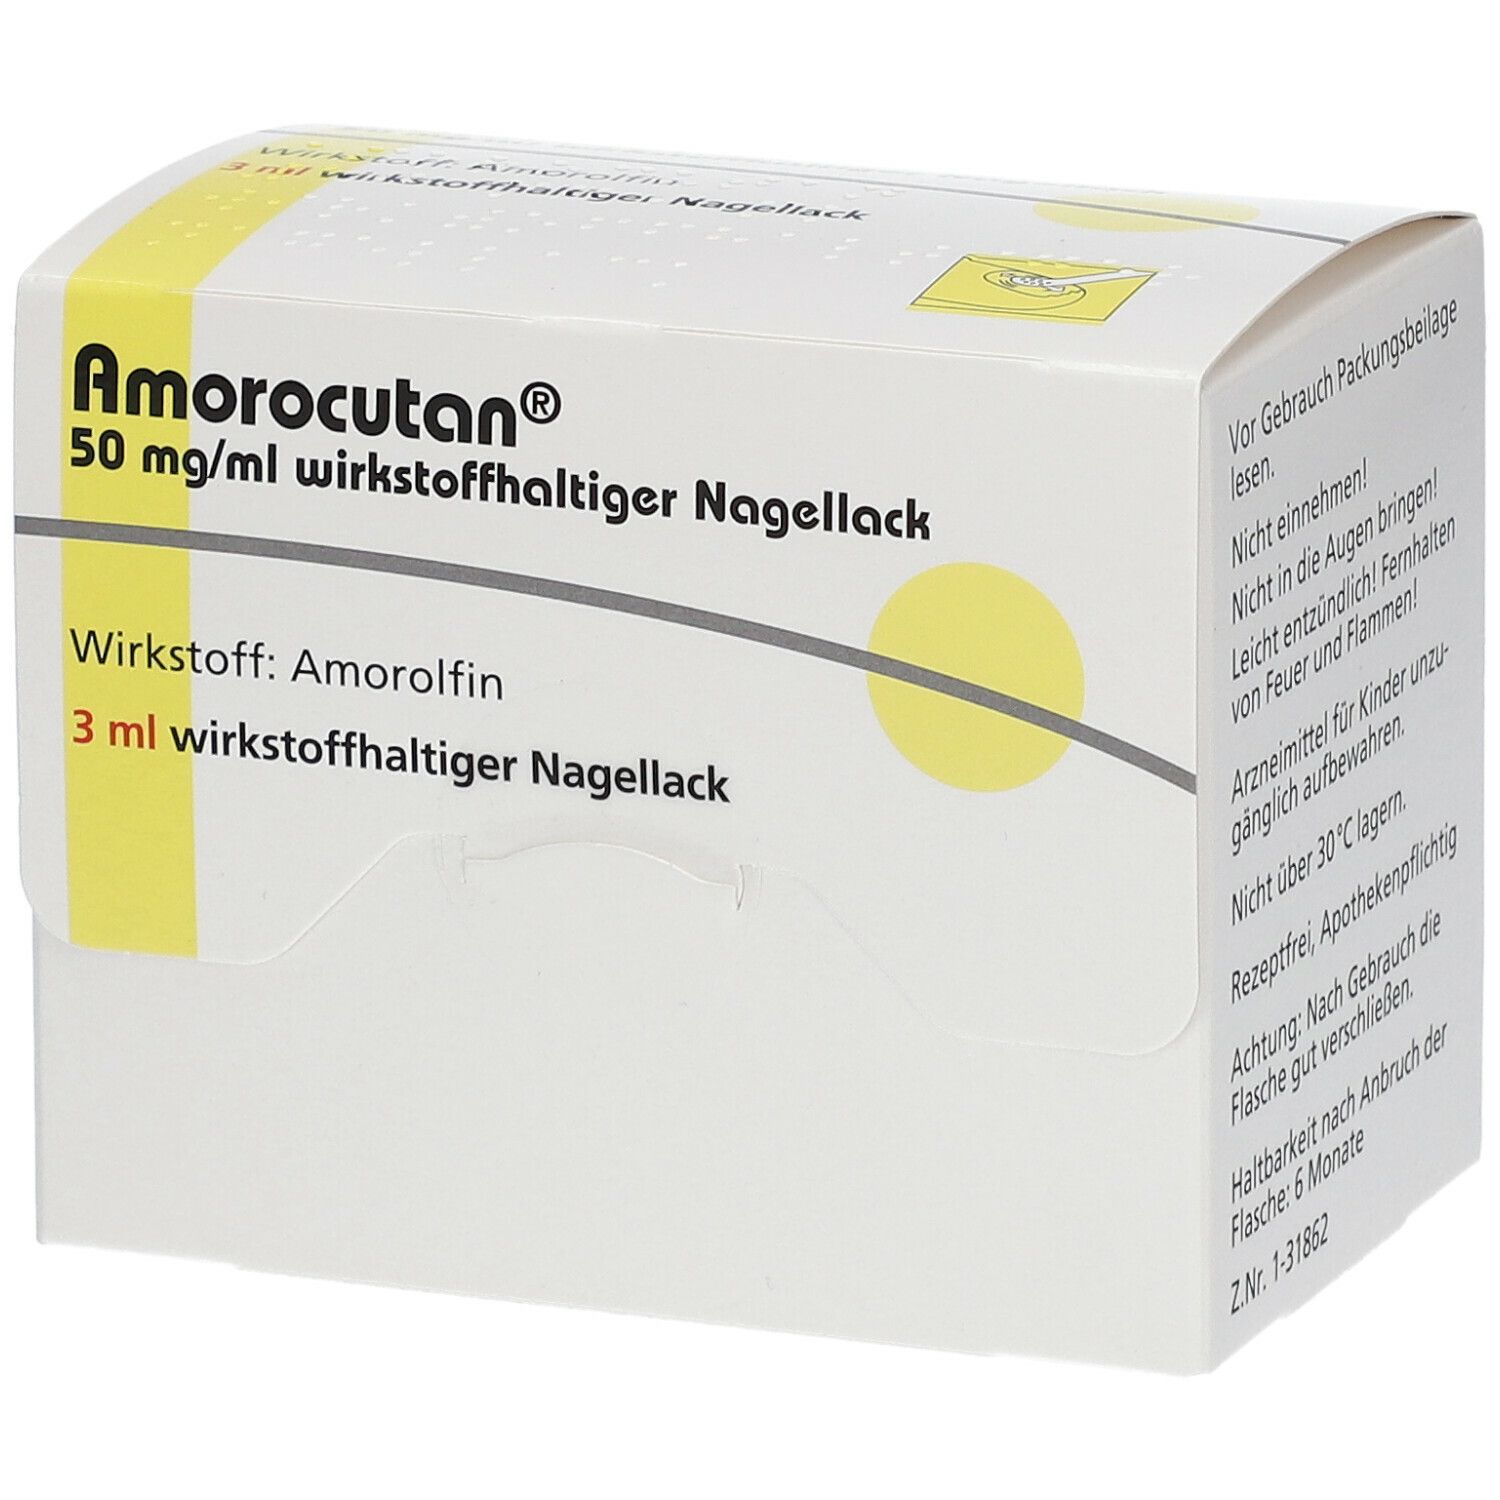 Amorocutan 50 mg/ml wirkstoffhaltiger Nagellack